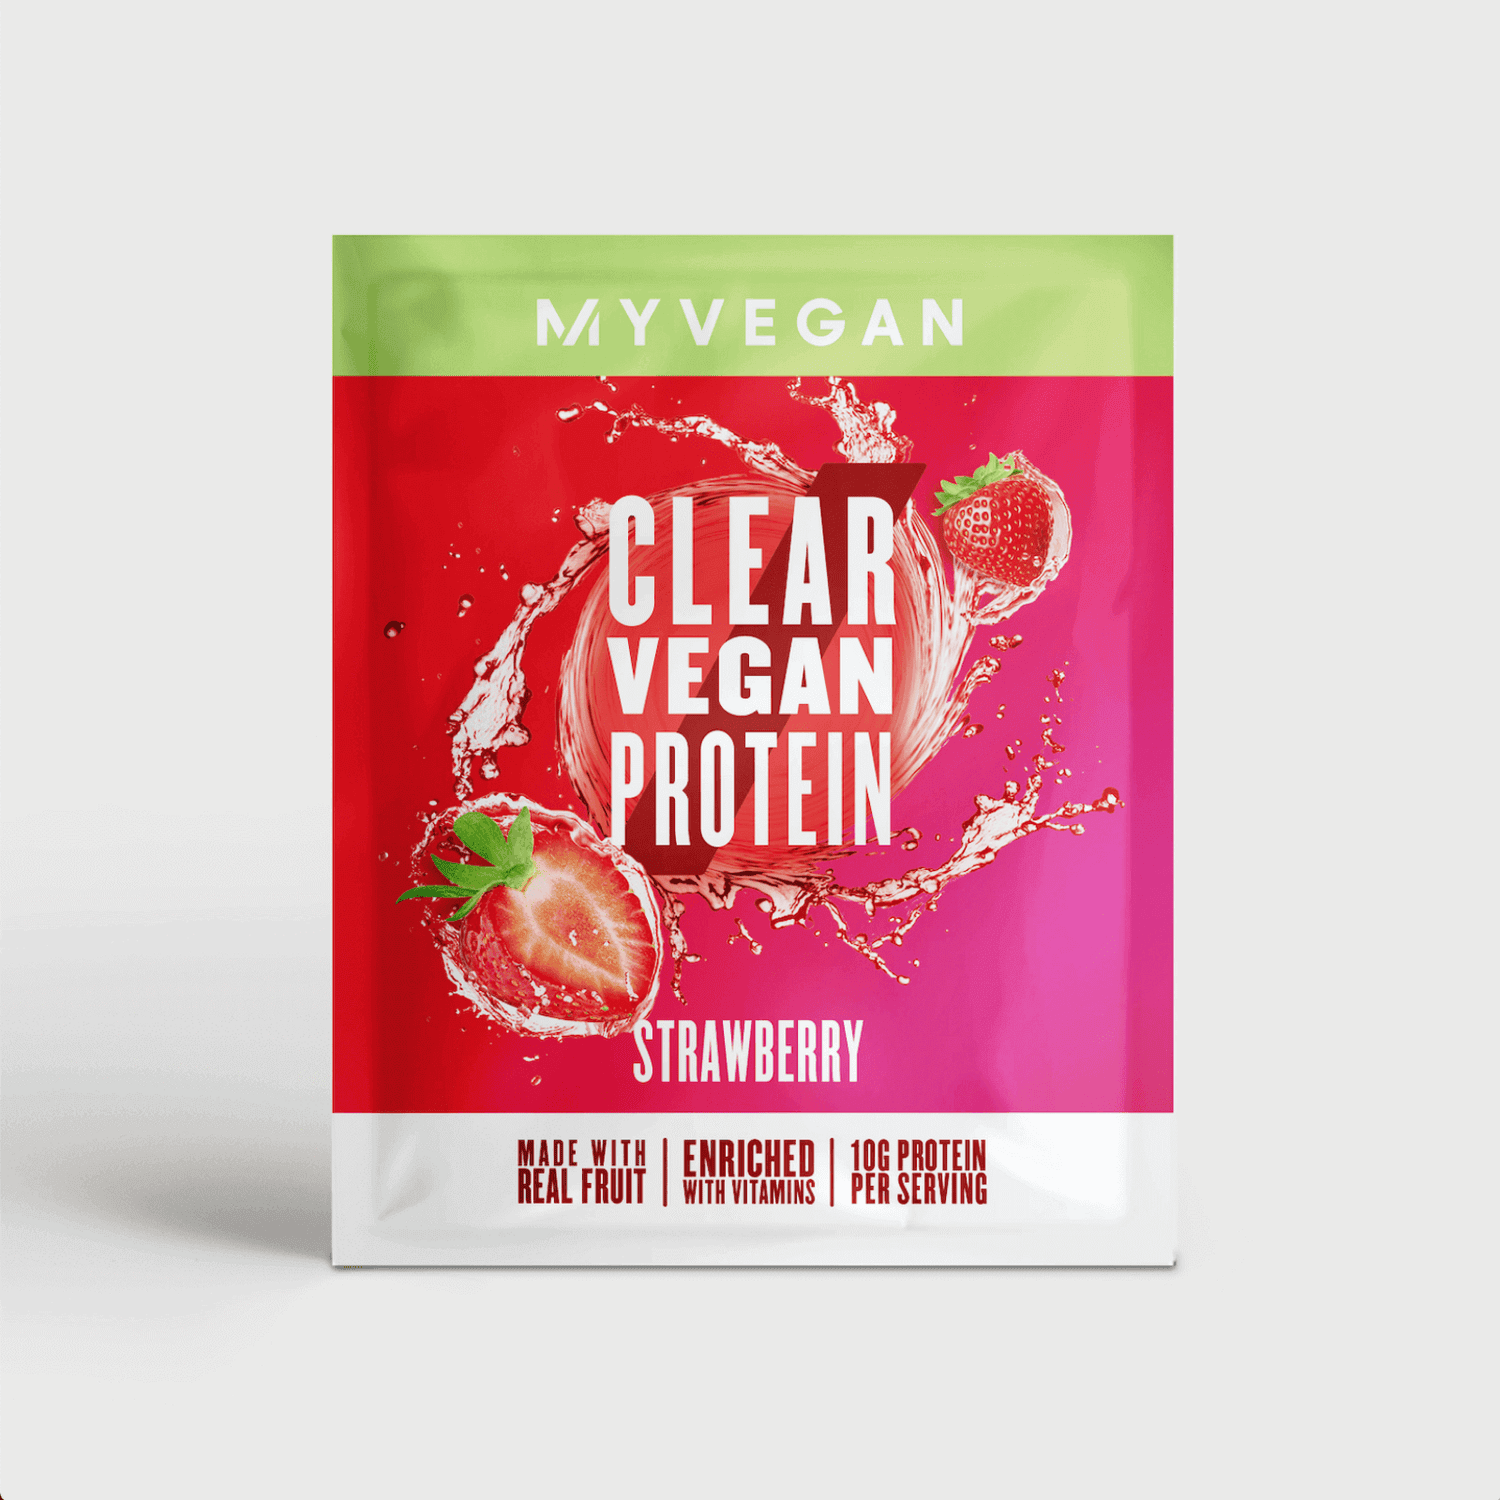 Myvegan Clear Vegan Protein, 16g (Sample) - 16g - Strawberry